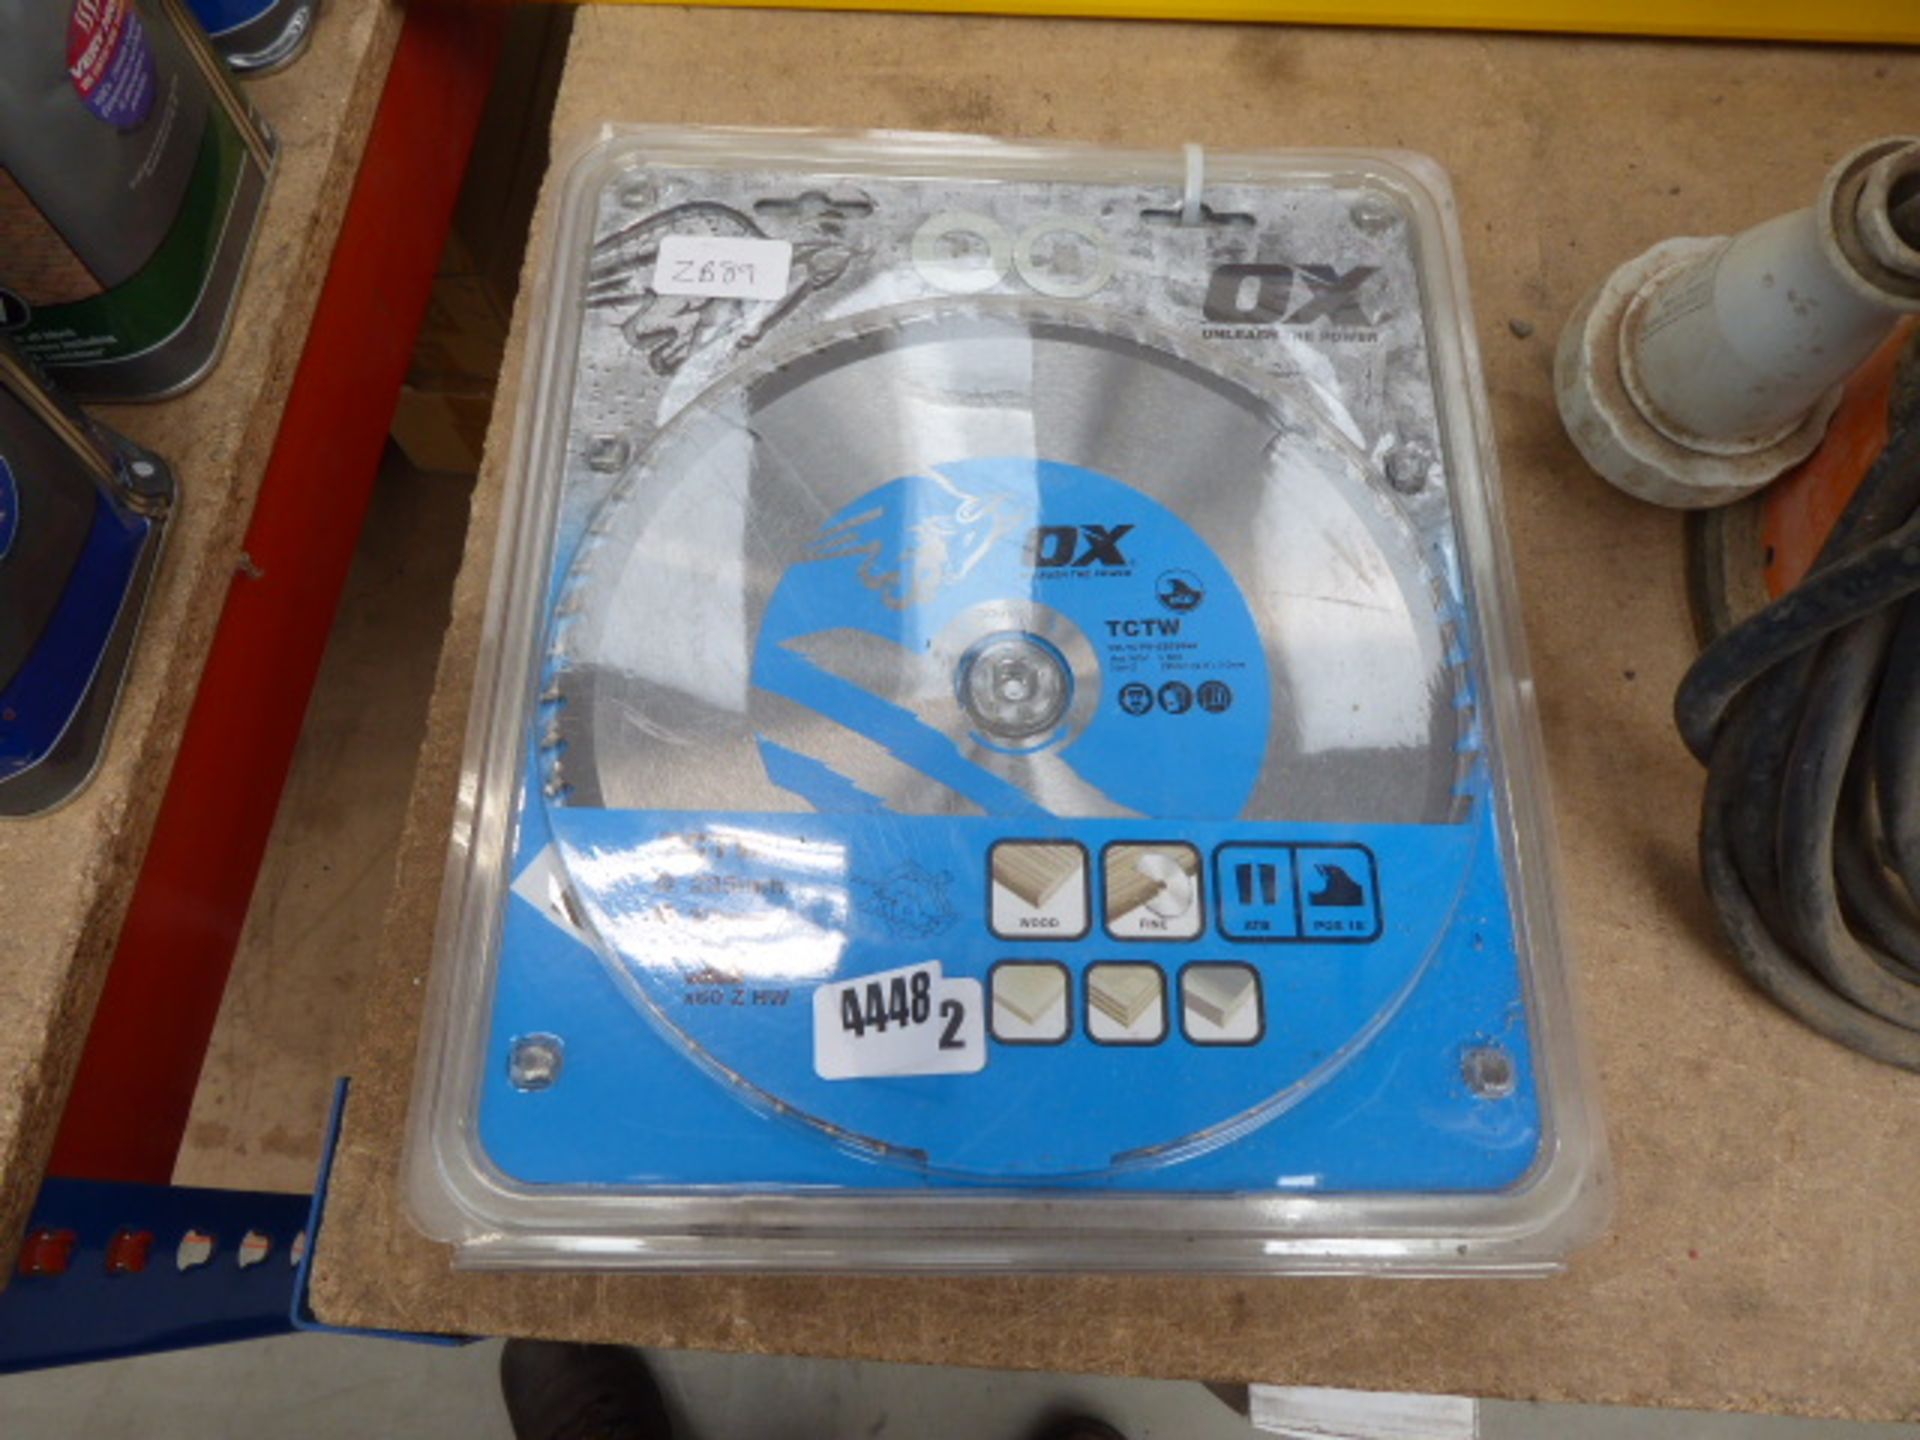 4342 5 OX cutting discs